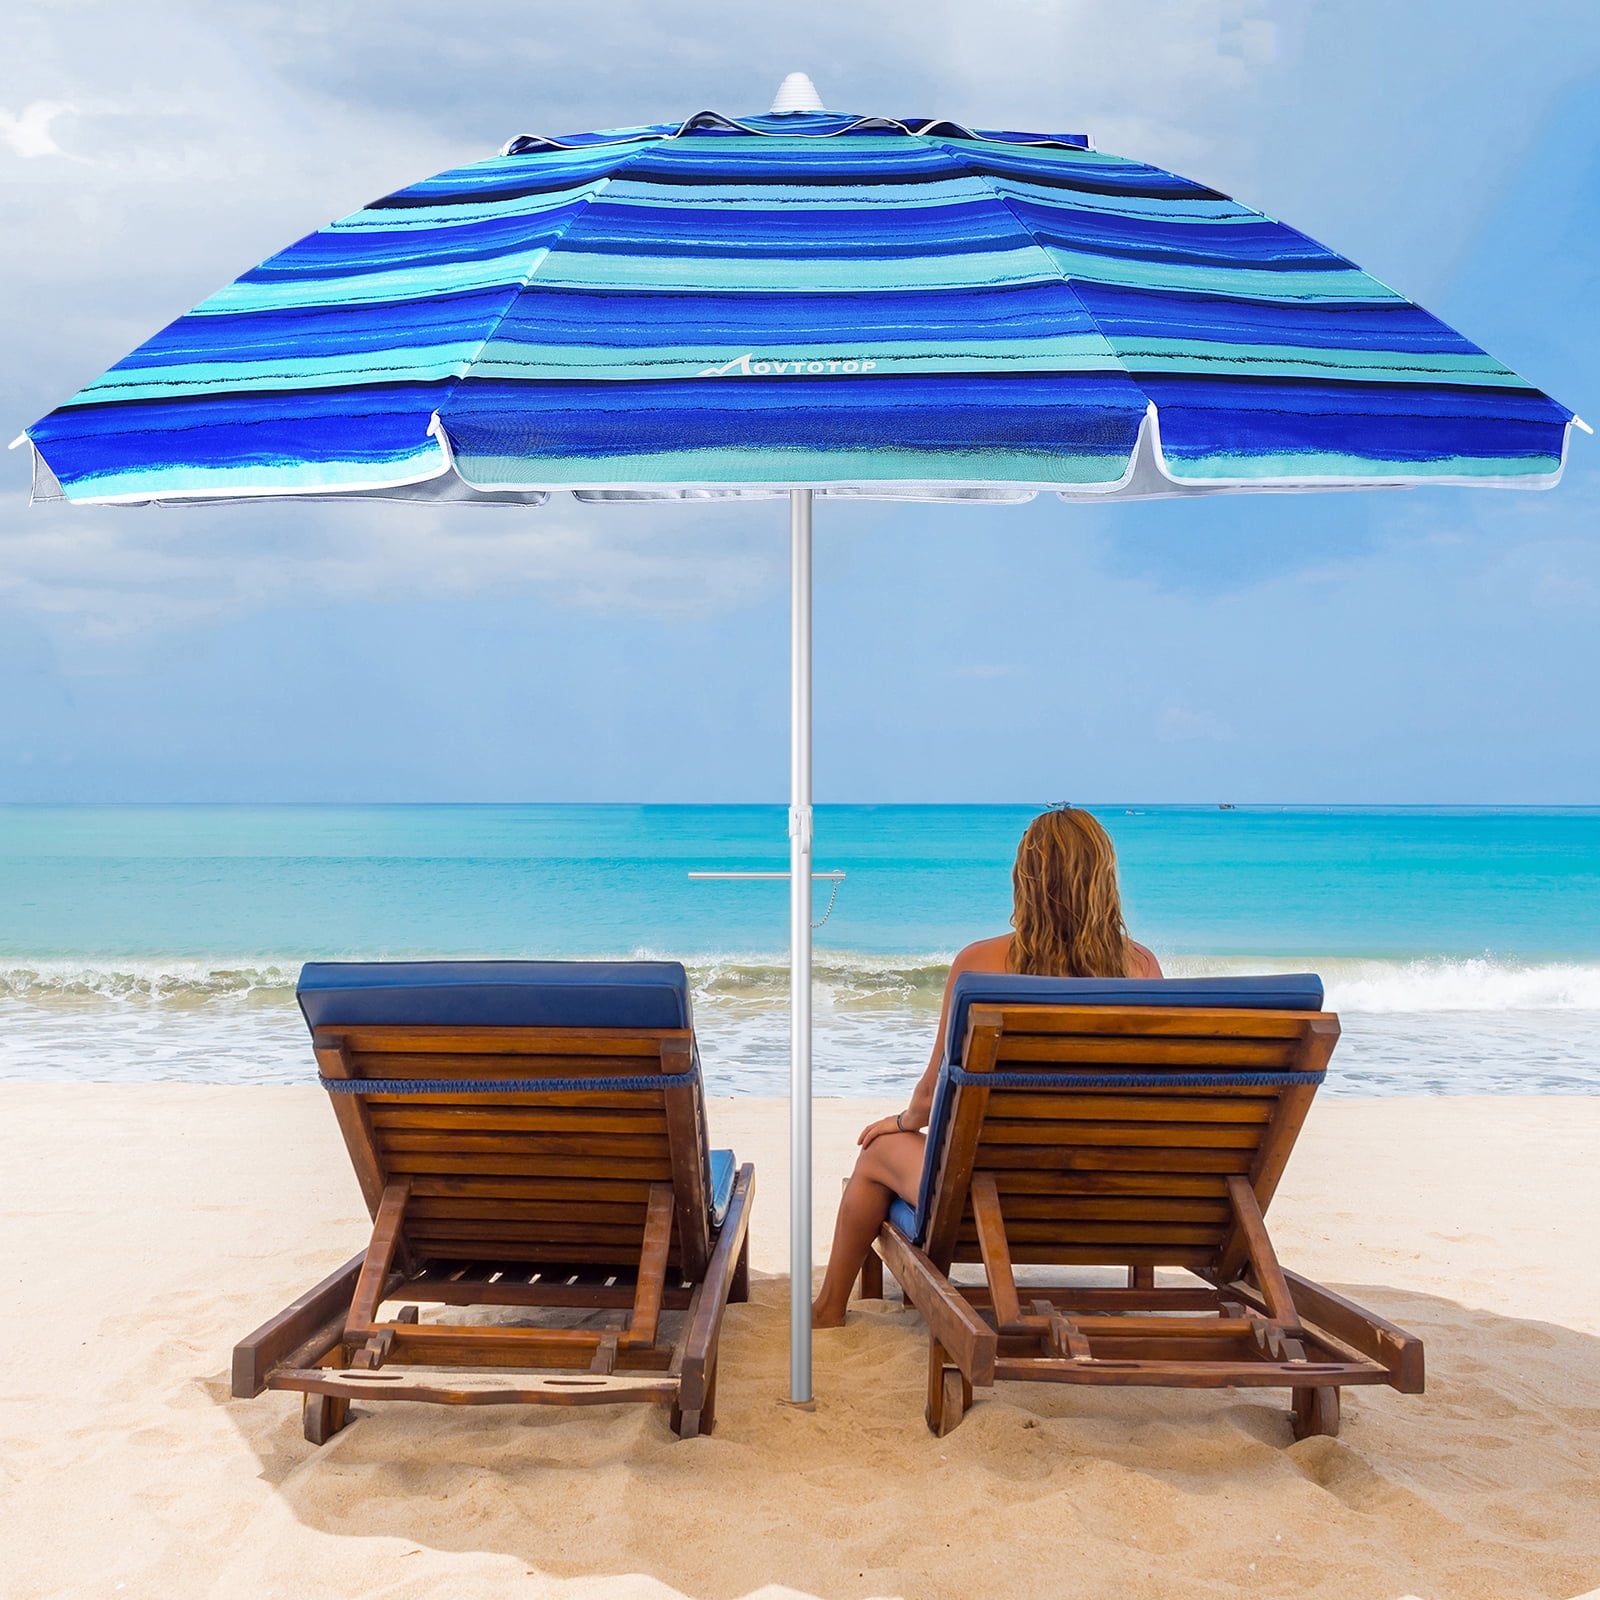 6.5ft Sand Anchor with Tilt Aluminum Pole Protection Beach Umbrella with Carry Bag for Outdoor Patio Blue/White Portable UV 100 MOVTOTOP Beach Umbrella